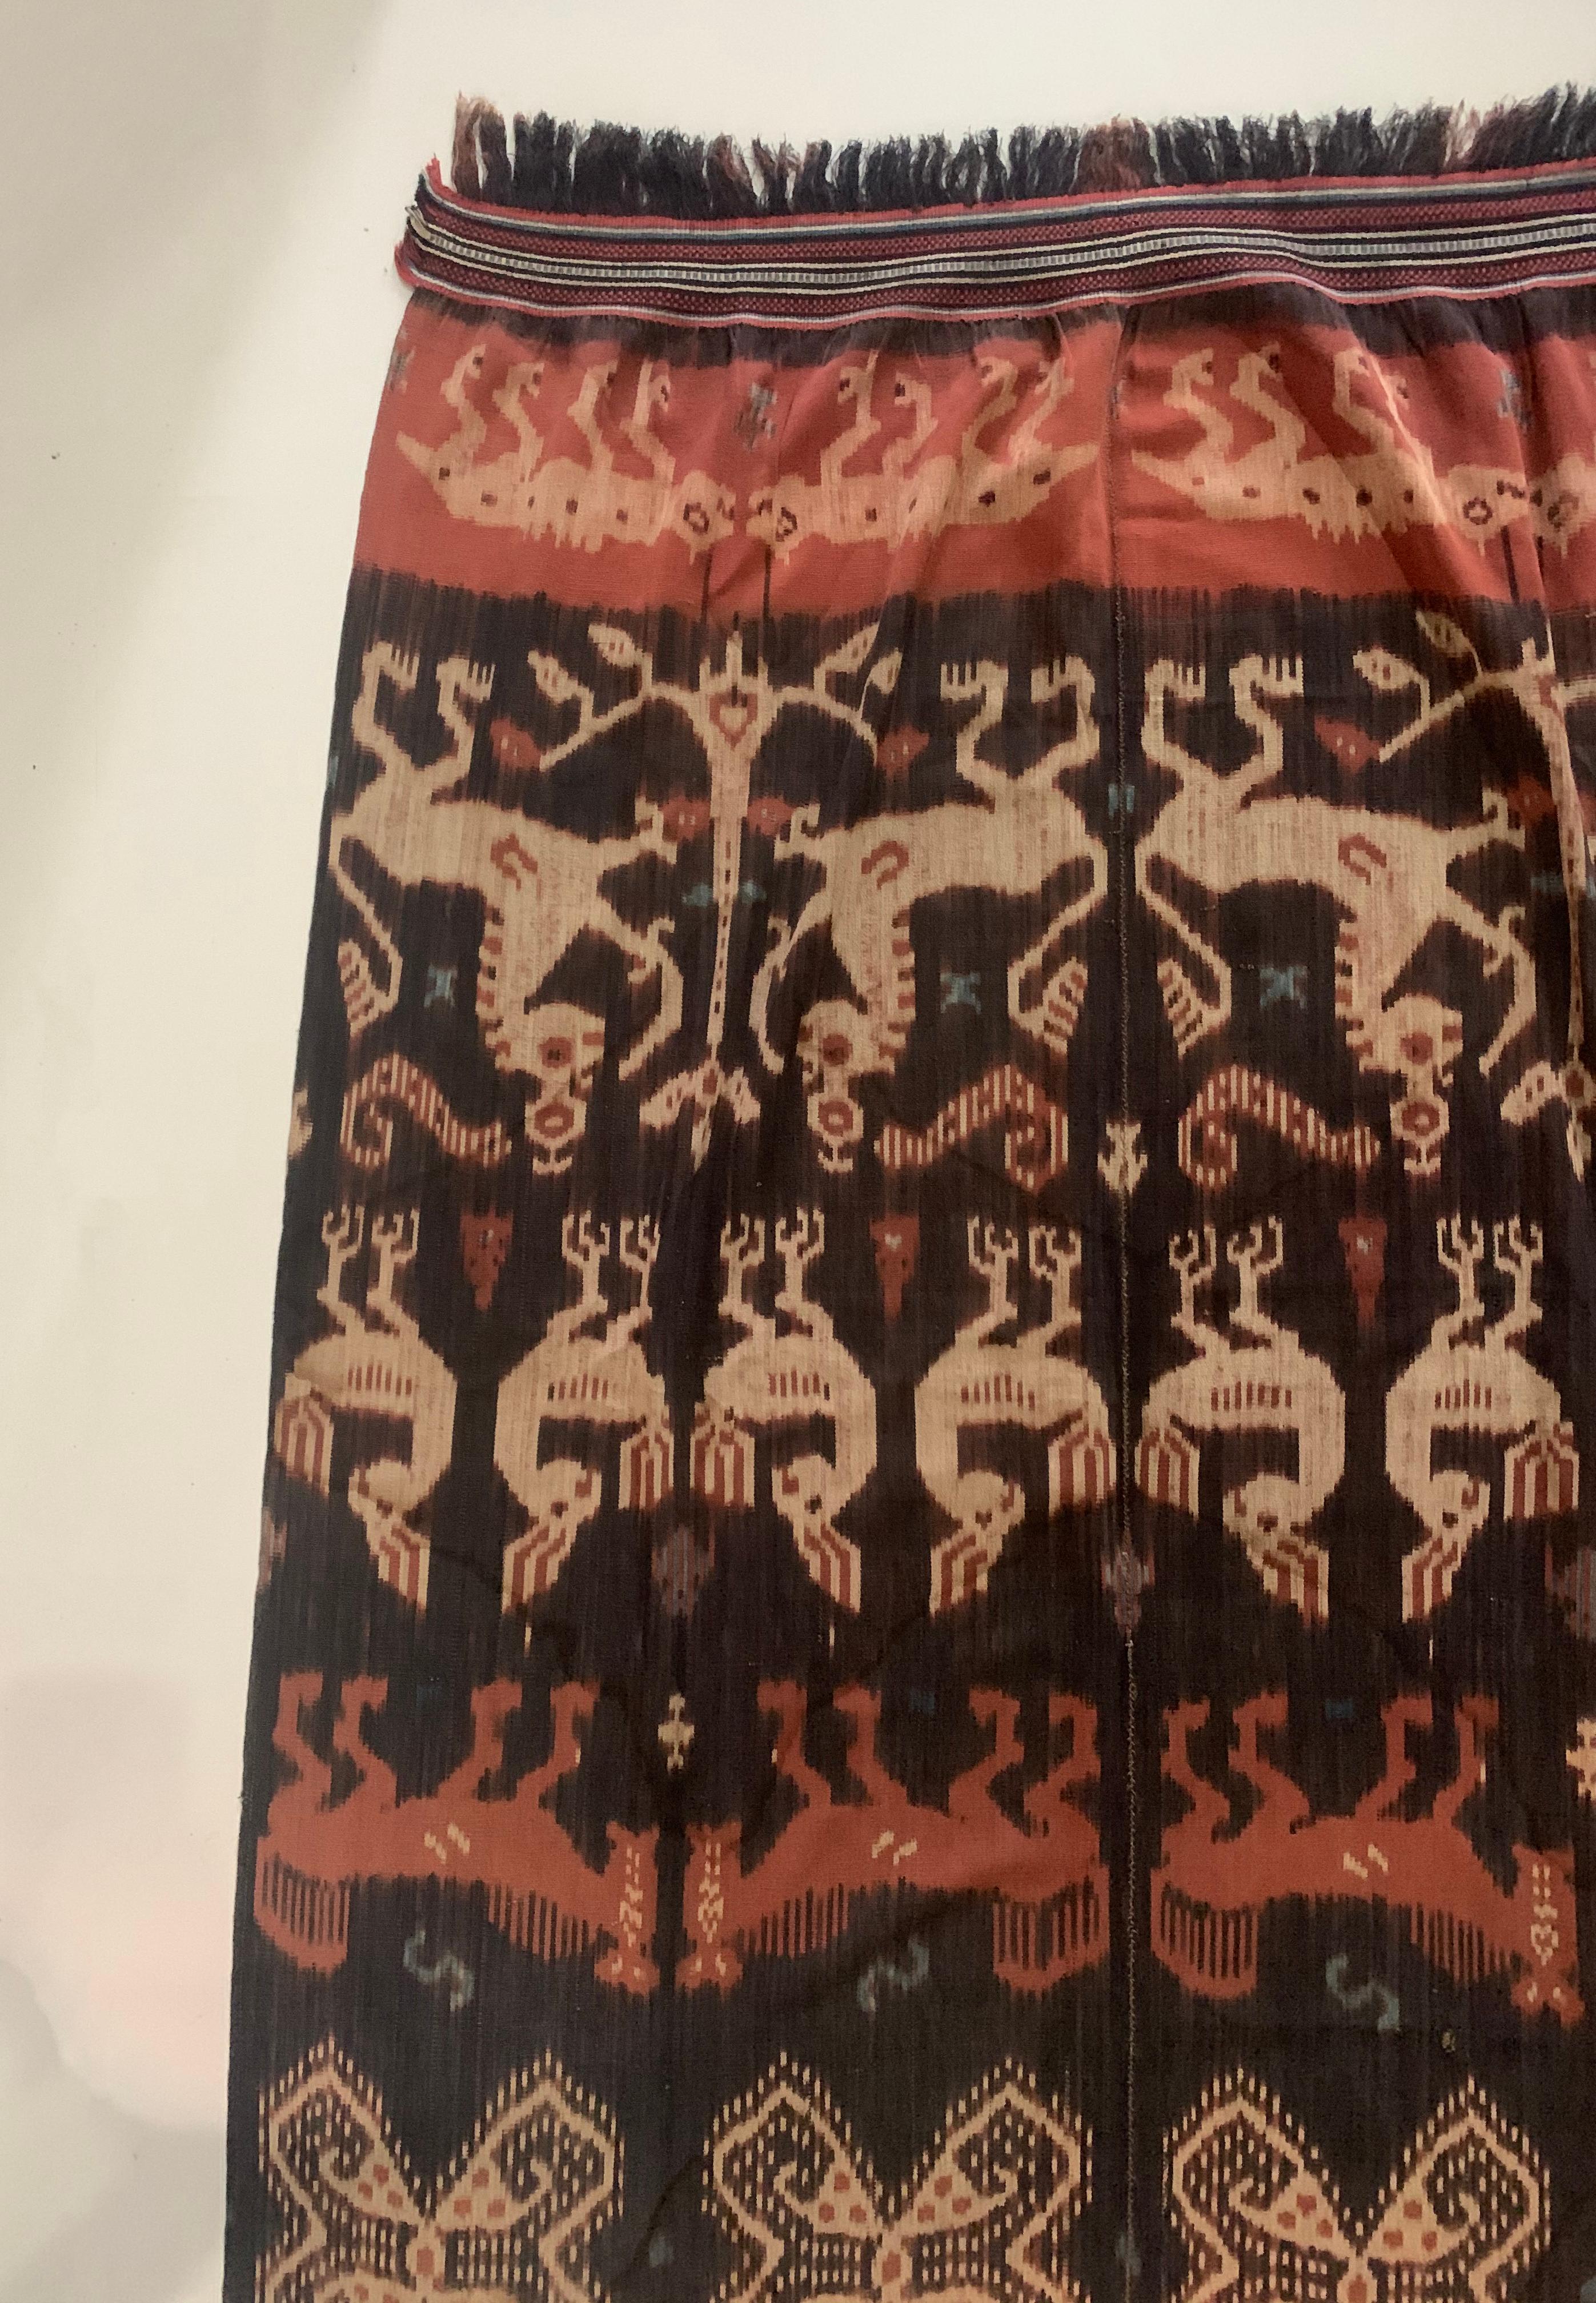 Yarn Ikat Textile from Sumba Island with Stunning Tribal Motifs, Indonesia